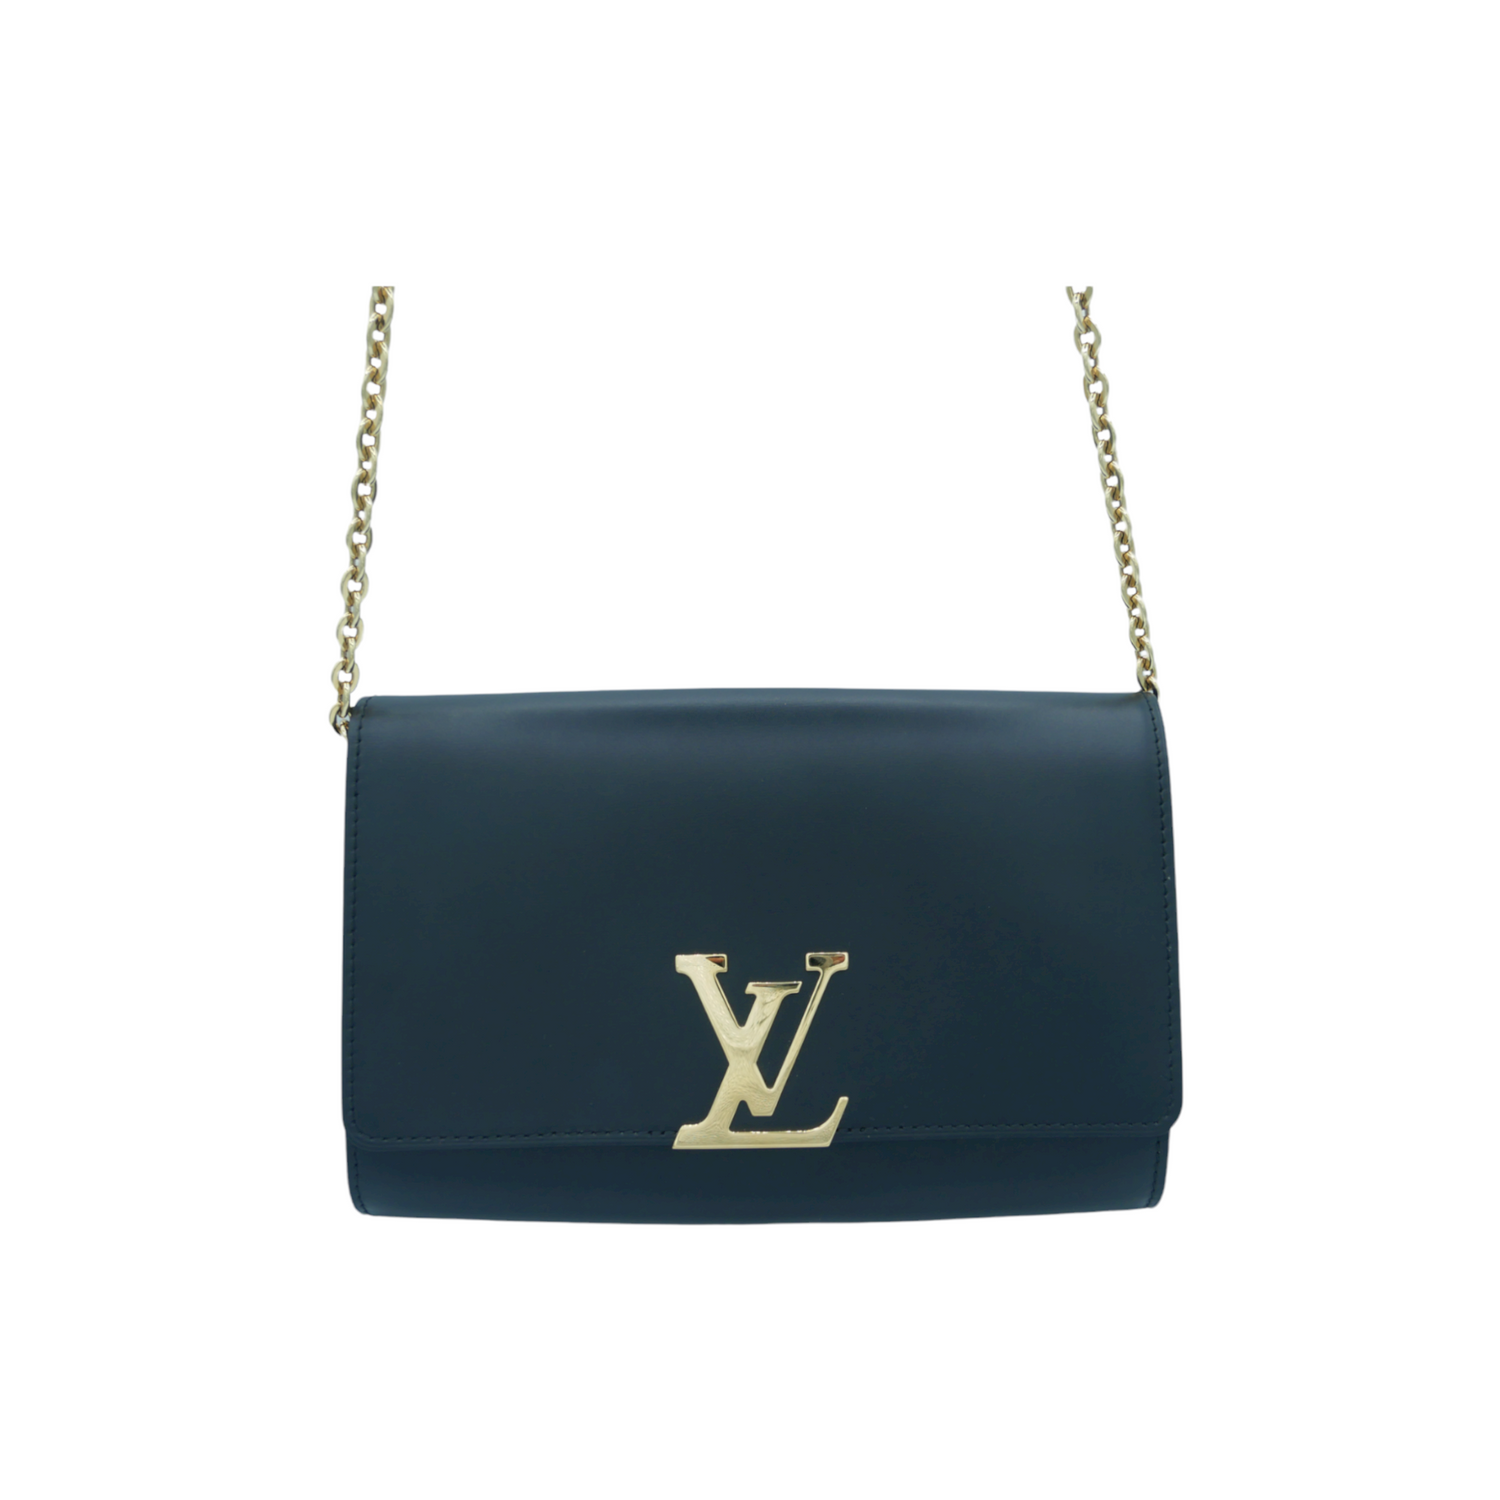 Louis Vuitton bag Louise model